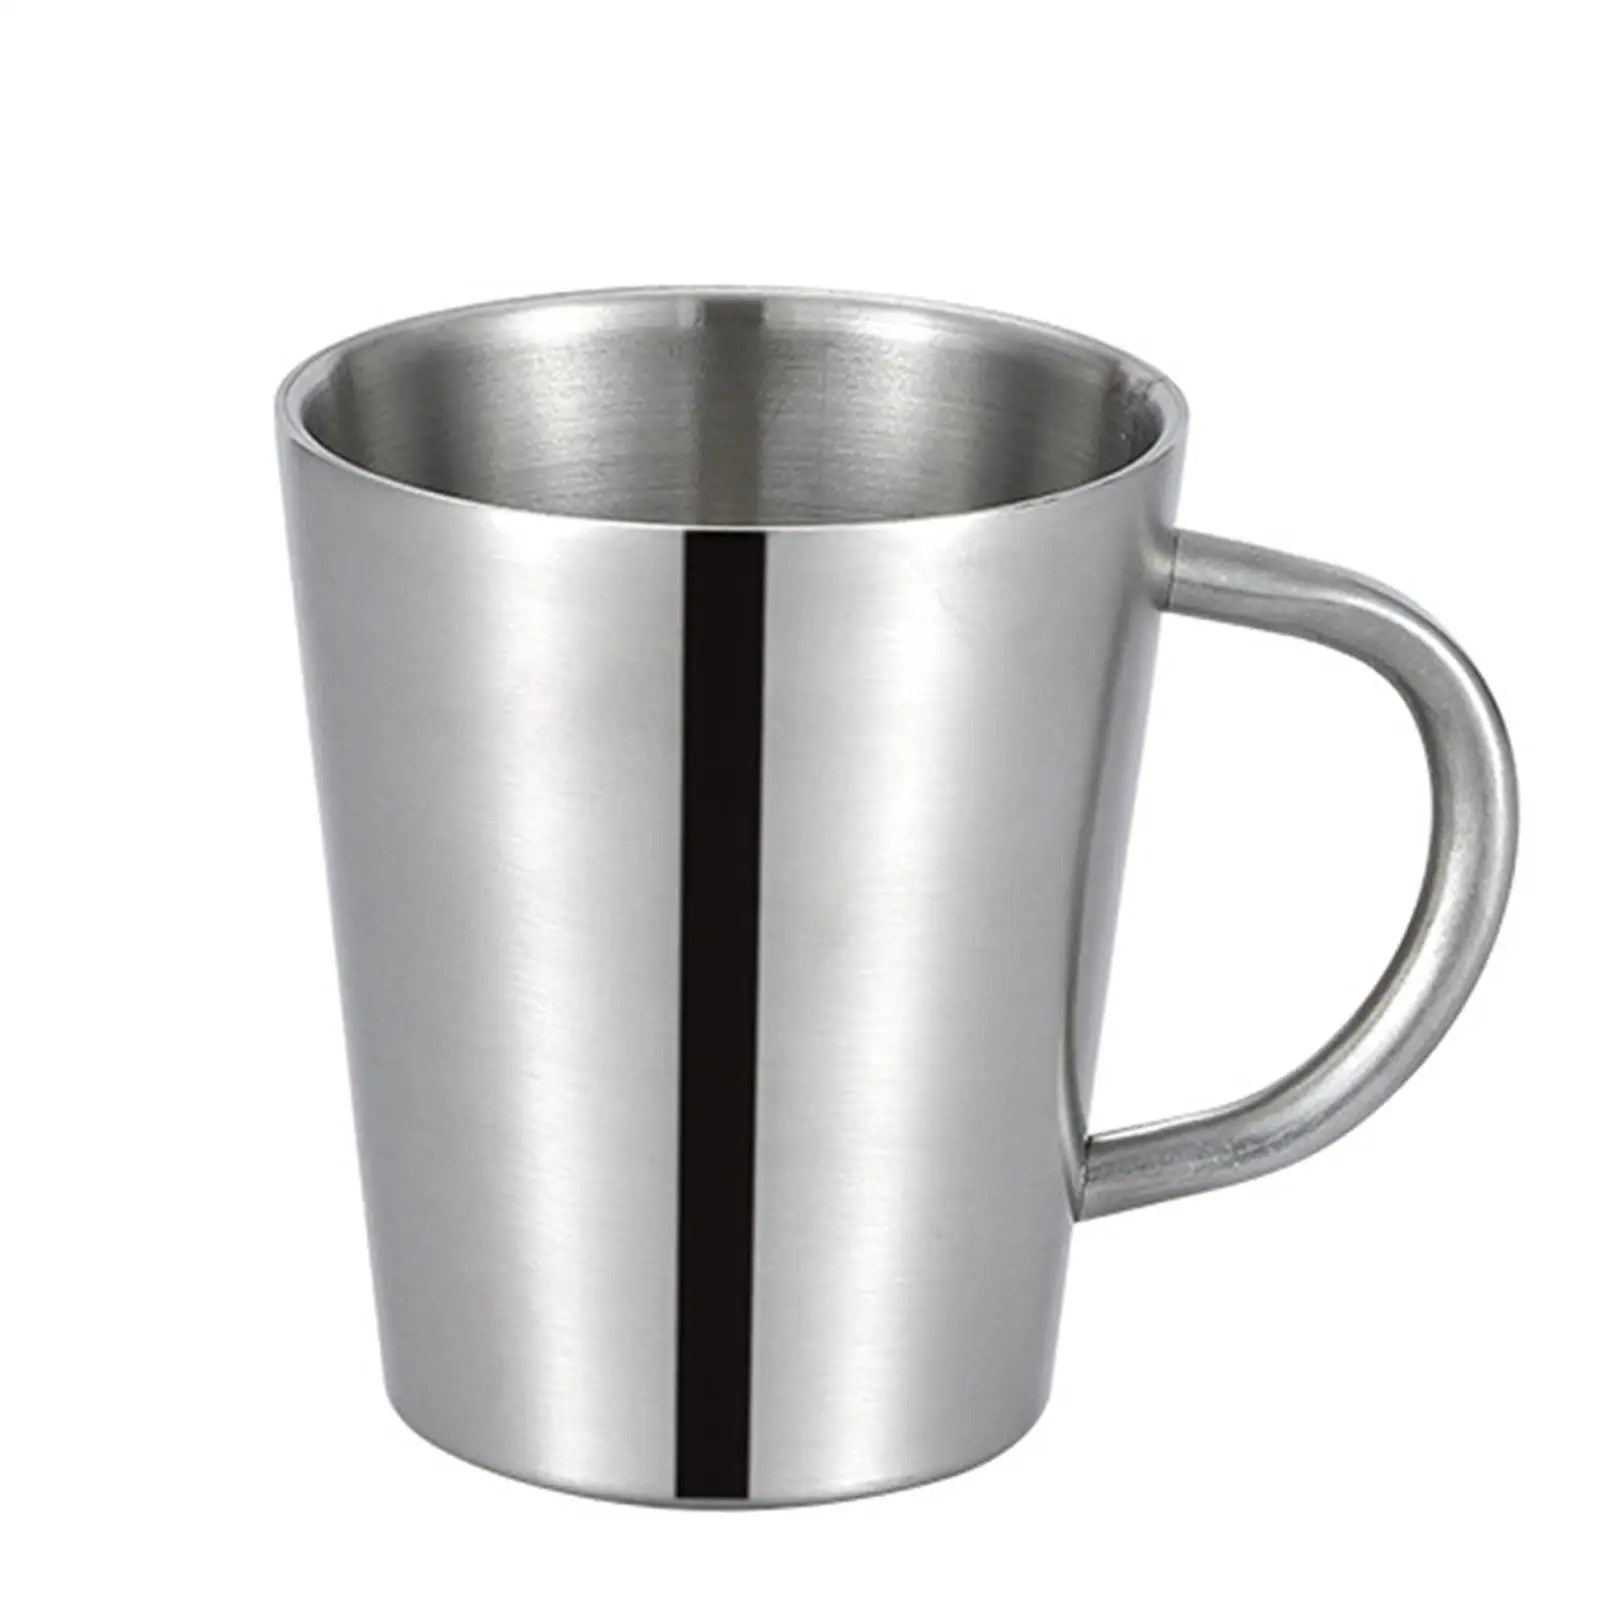 Beer Mug Hike Cup Picnic Utensils 300ml Camping Sports Travel Drinkware Cup Travel Mug Iced Tea Juice